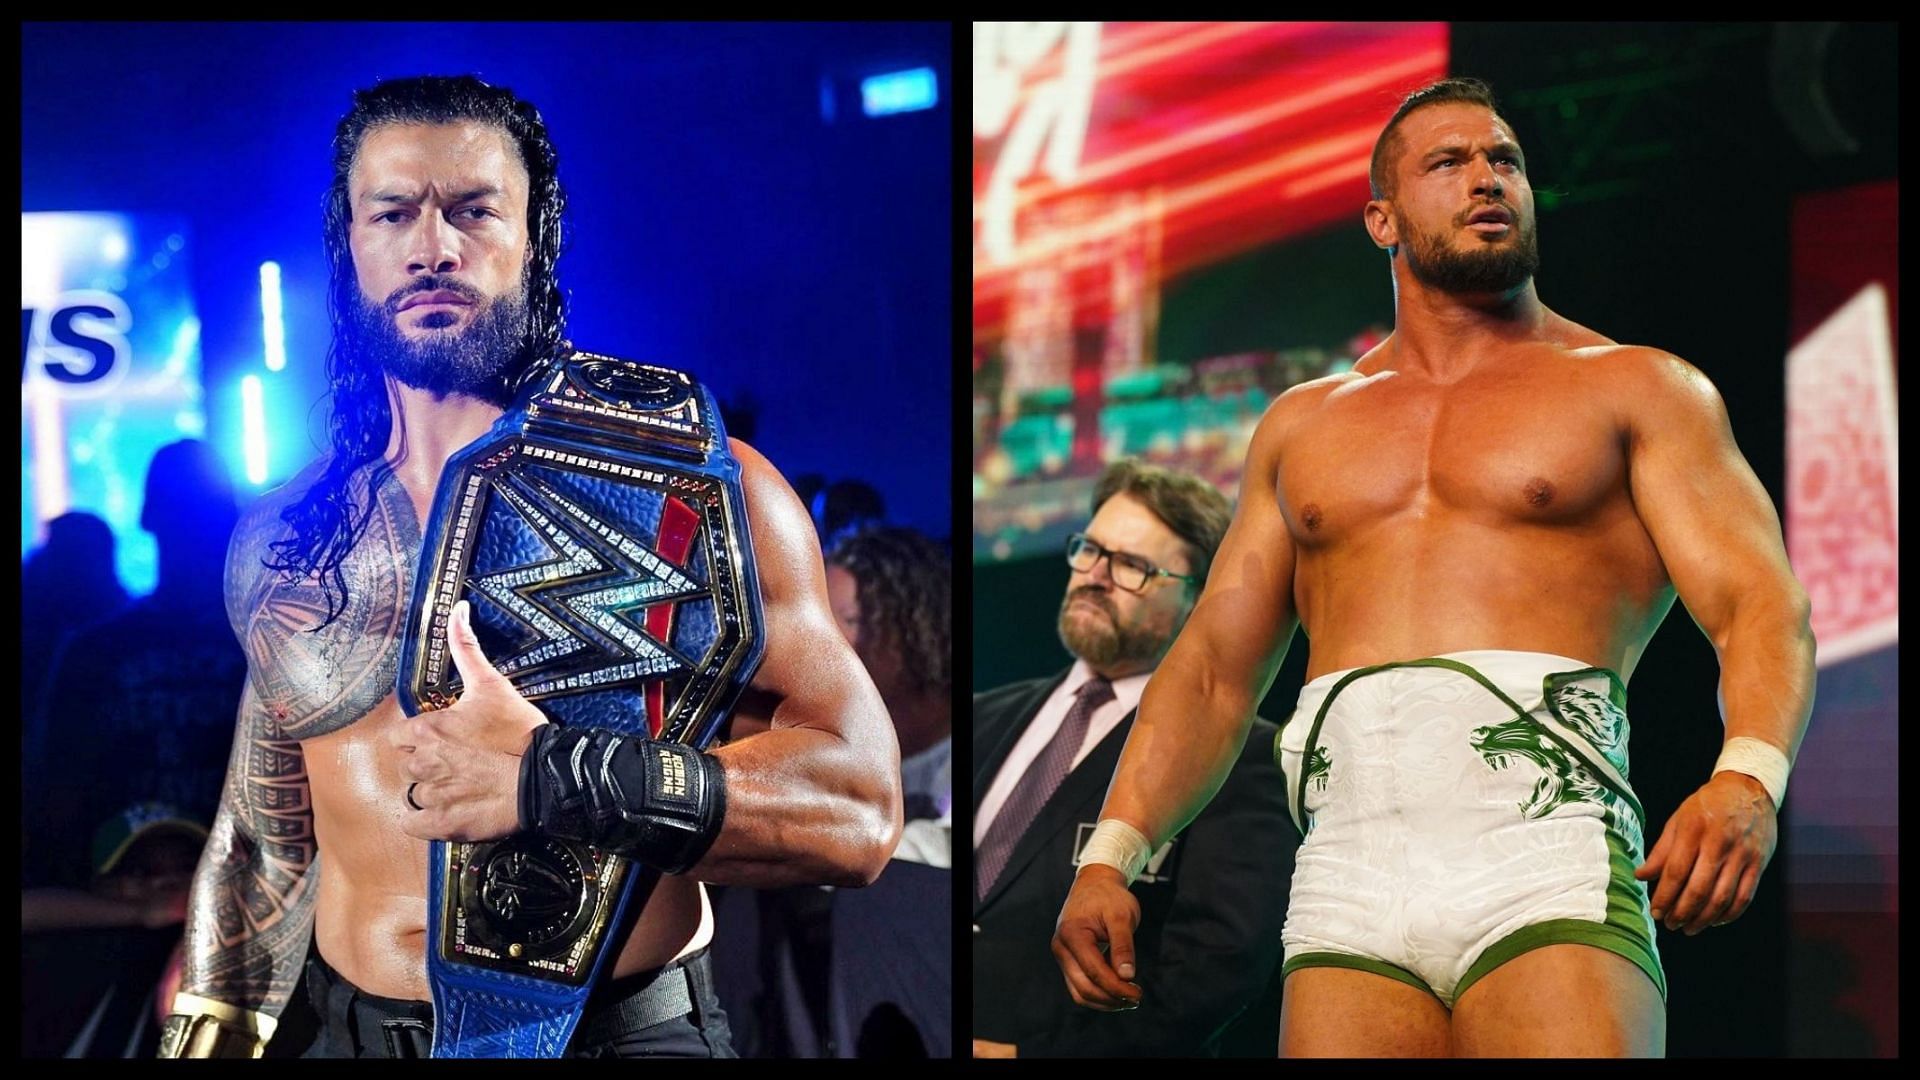 WWE Universal Champion Roman Reigns vs. AEW TNT Champion Wardlow for the main event!